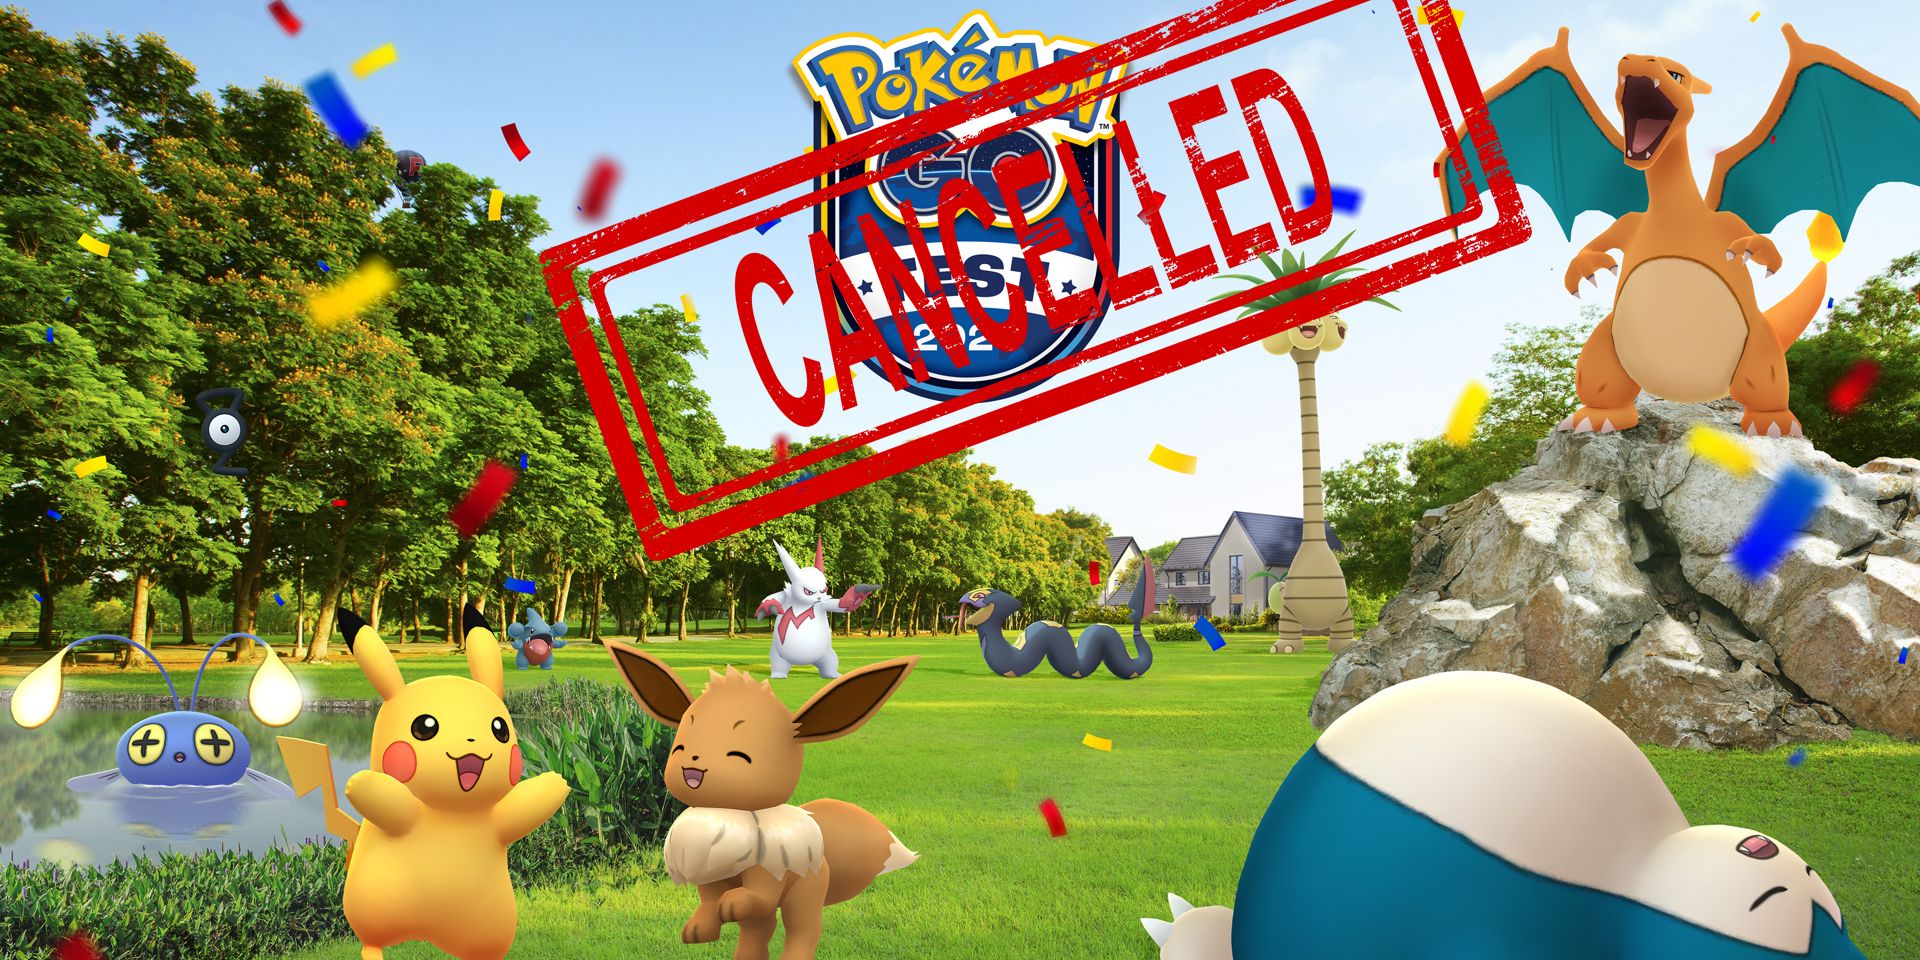 Pokémon GO Fest cancelled due to COVID-19 concerns